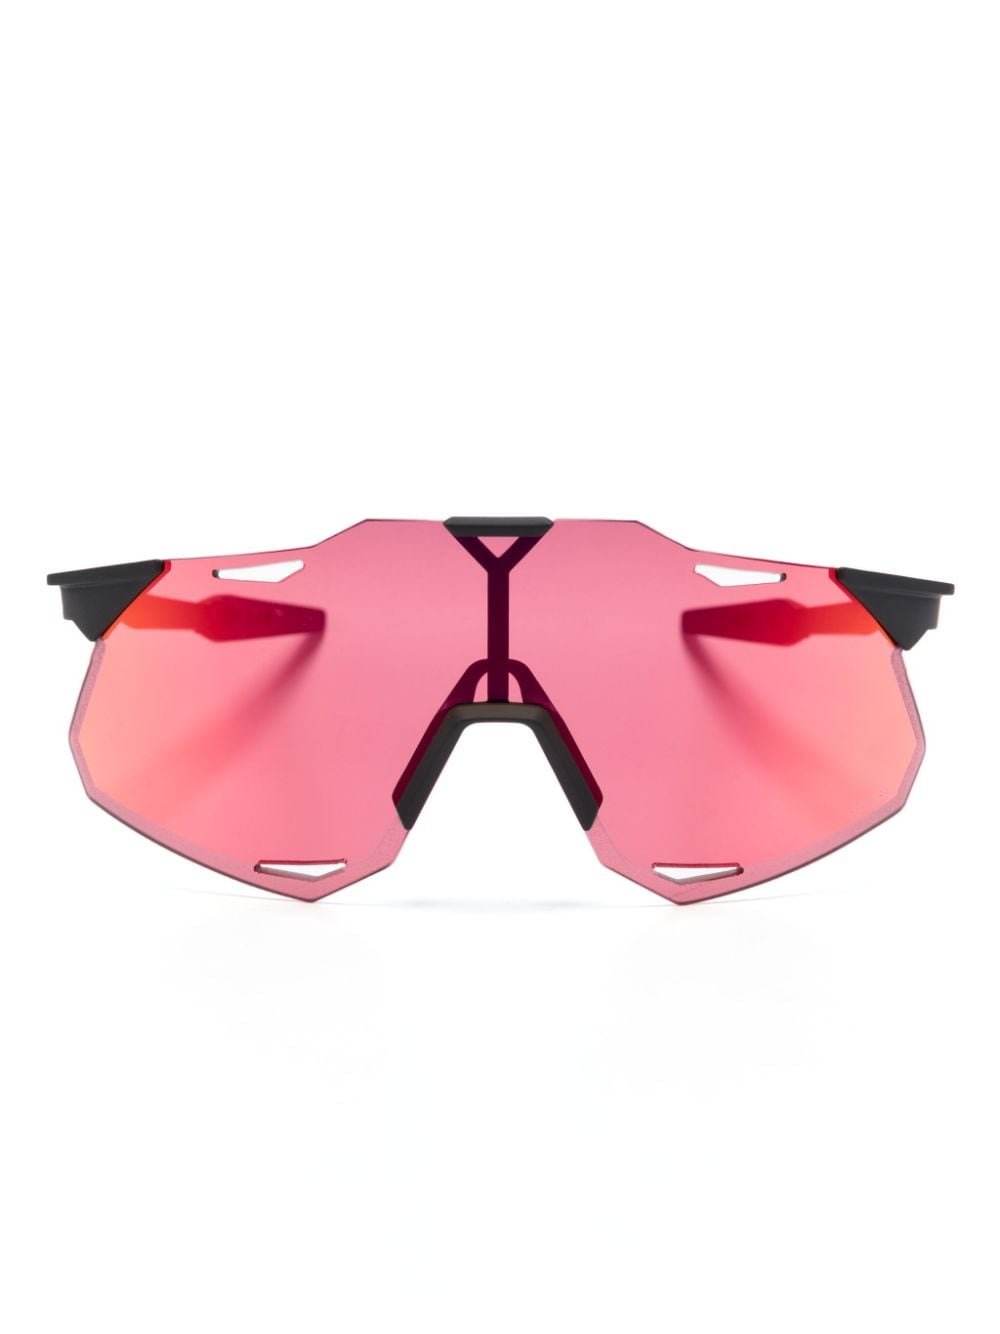 XS shield-frame sunglasses